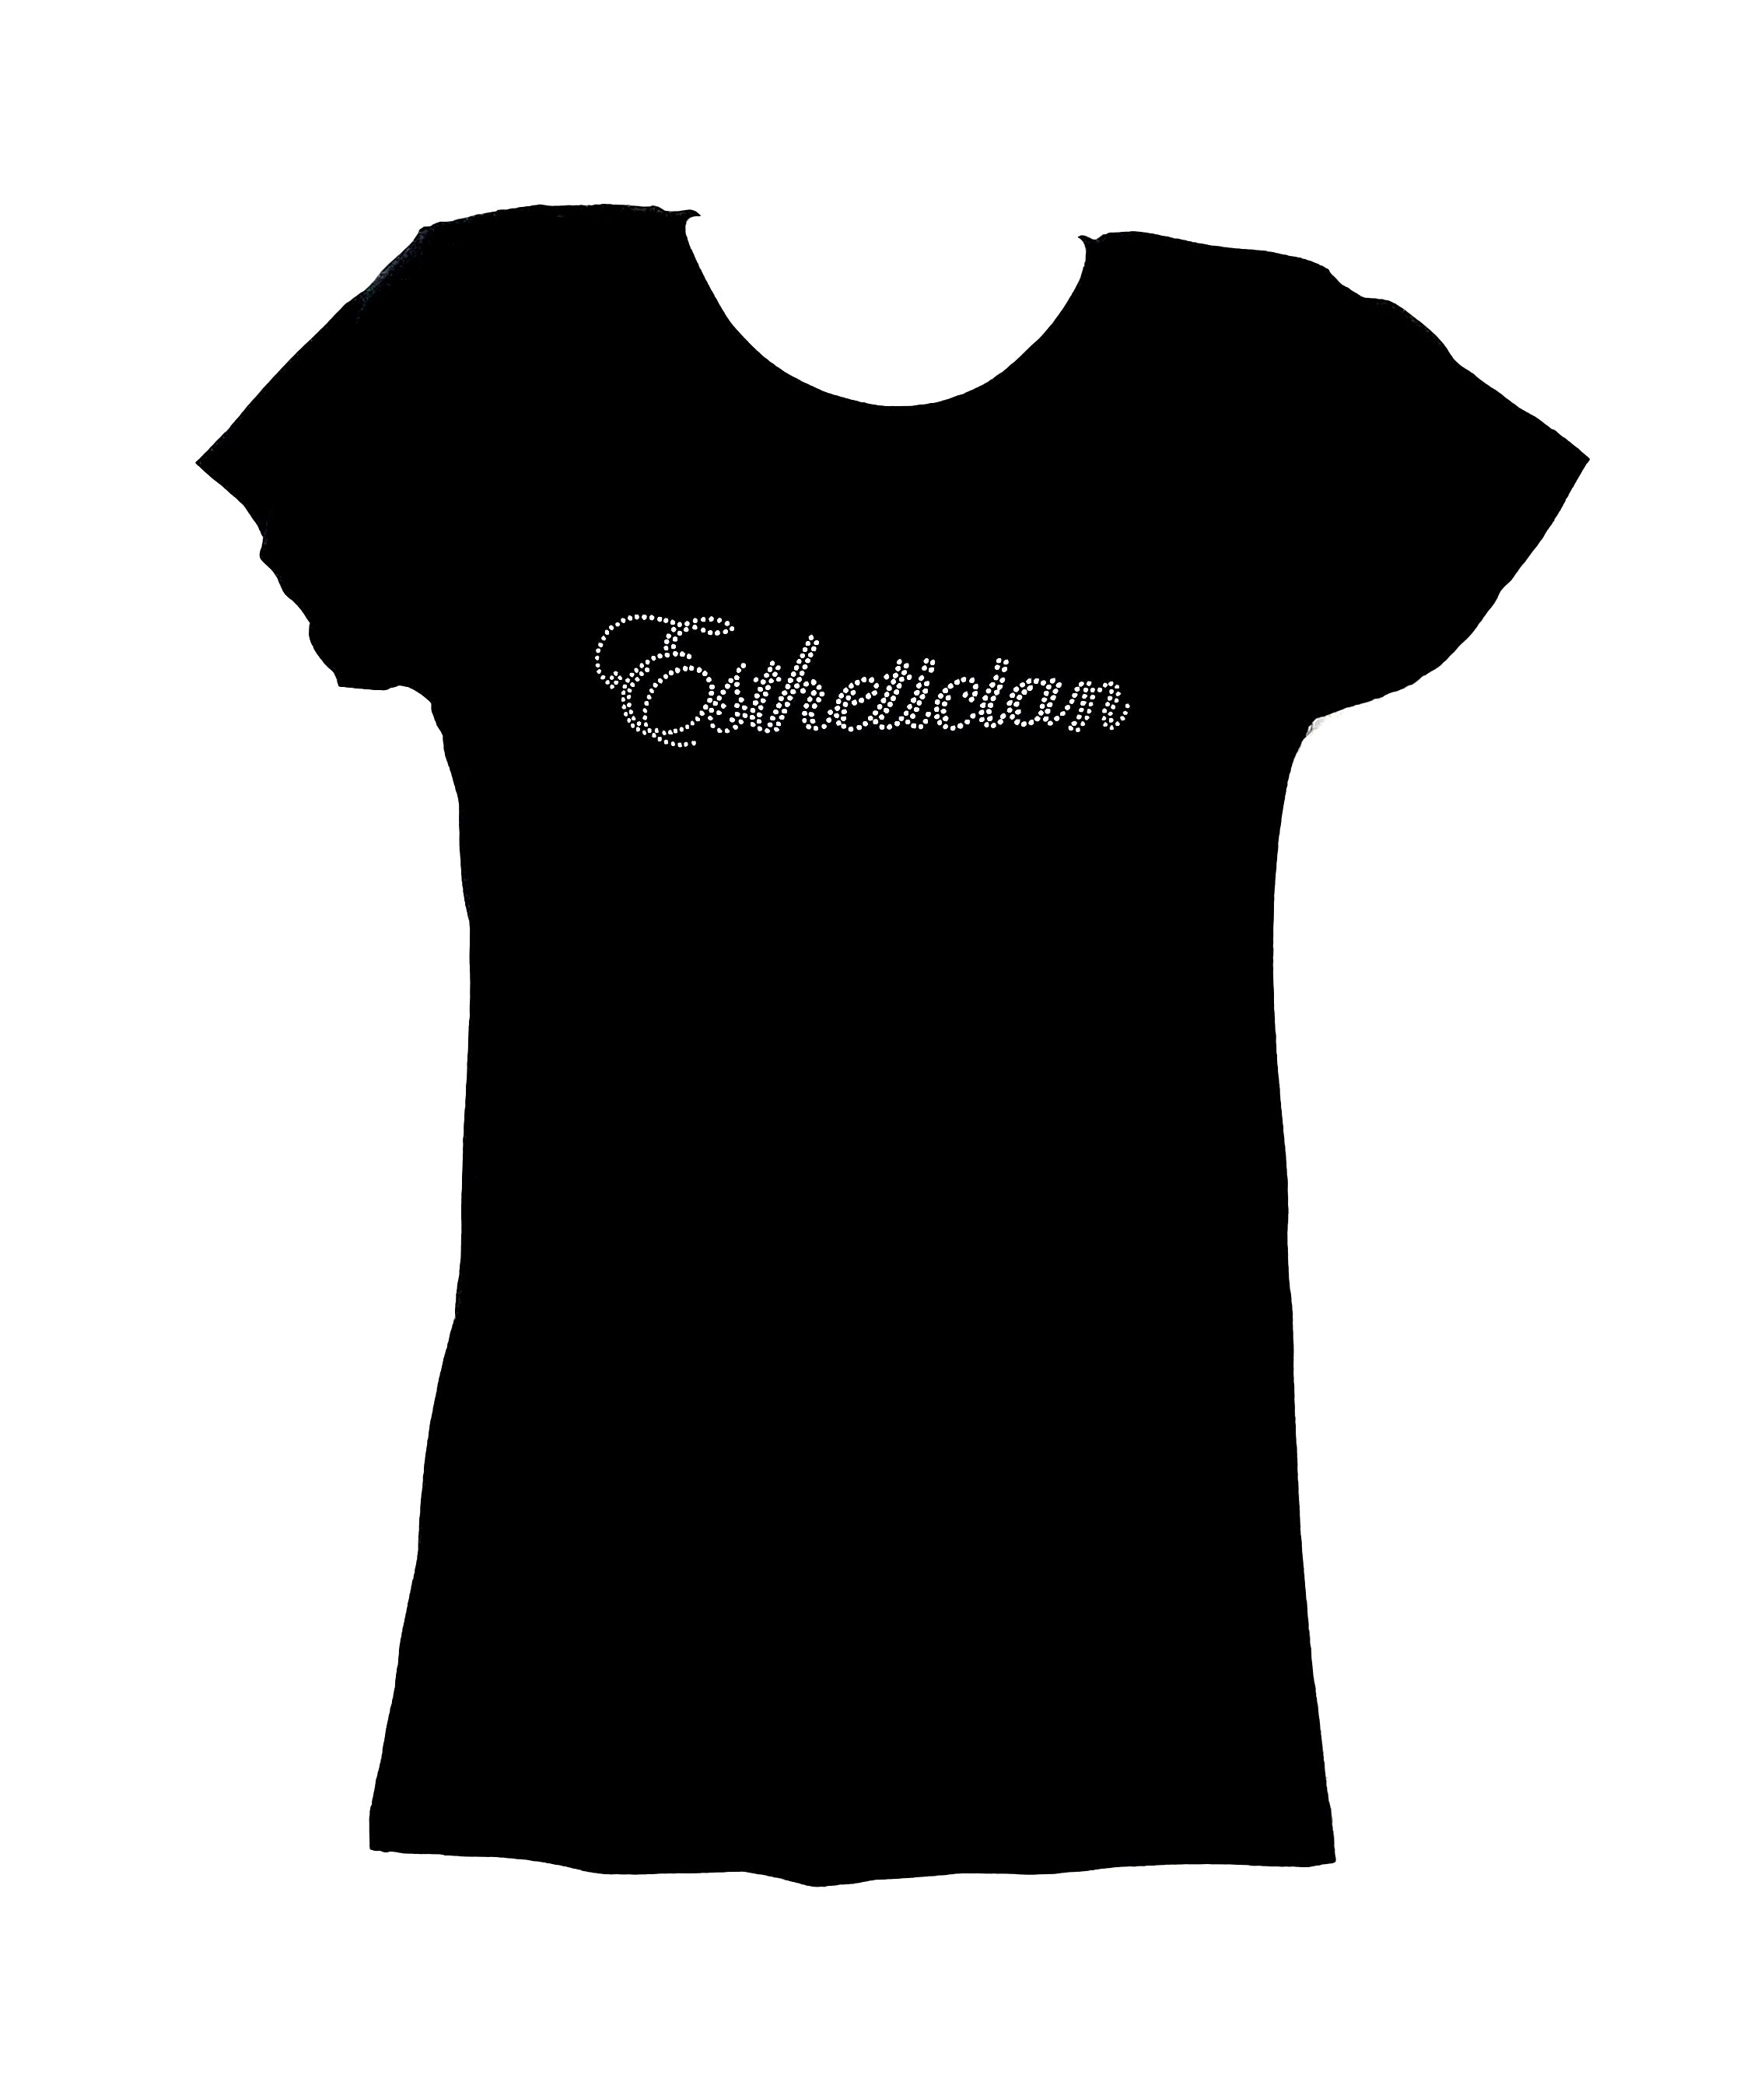 Esthetician T shirt